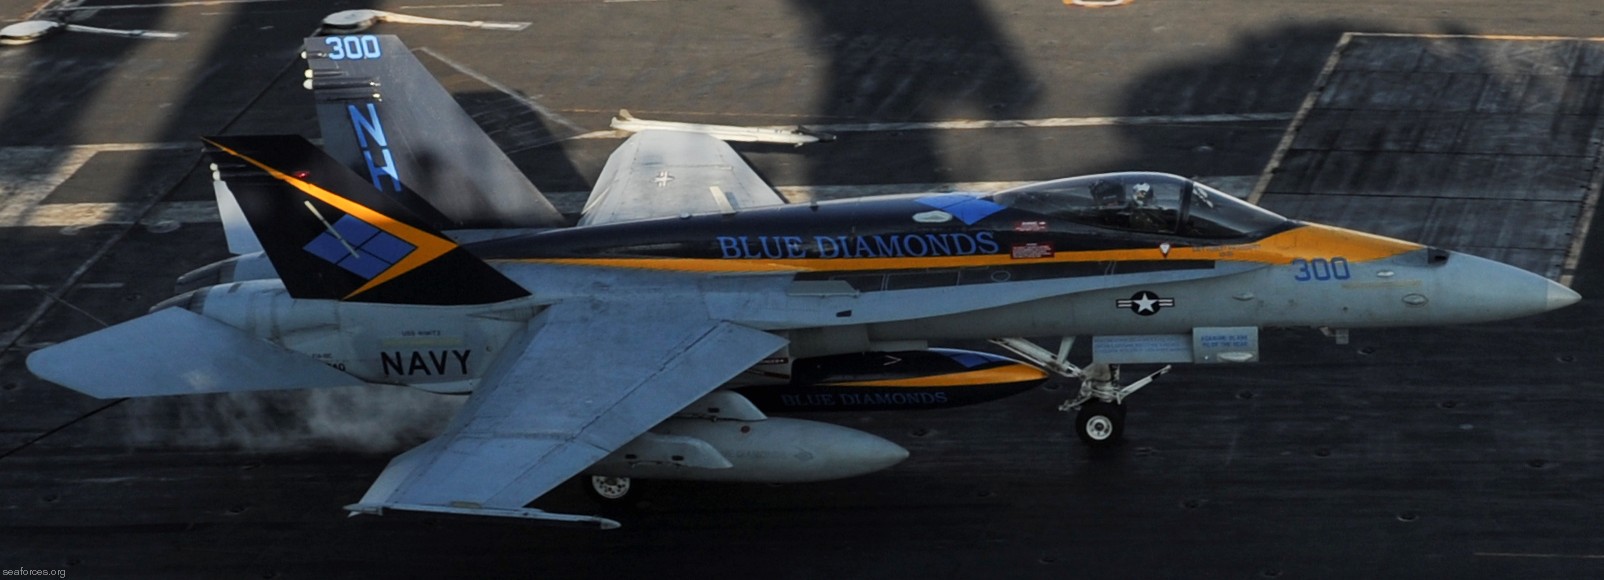 vfa-146 blue diamonds strike fighter squadron f/a-18c hornet carrier air wing cvw-11 uss nimitz cvn-68 133